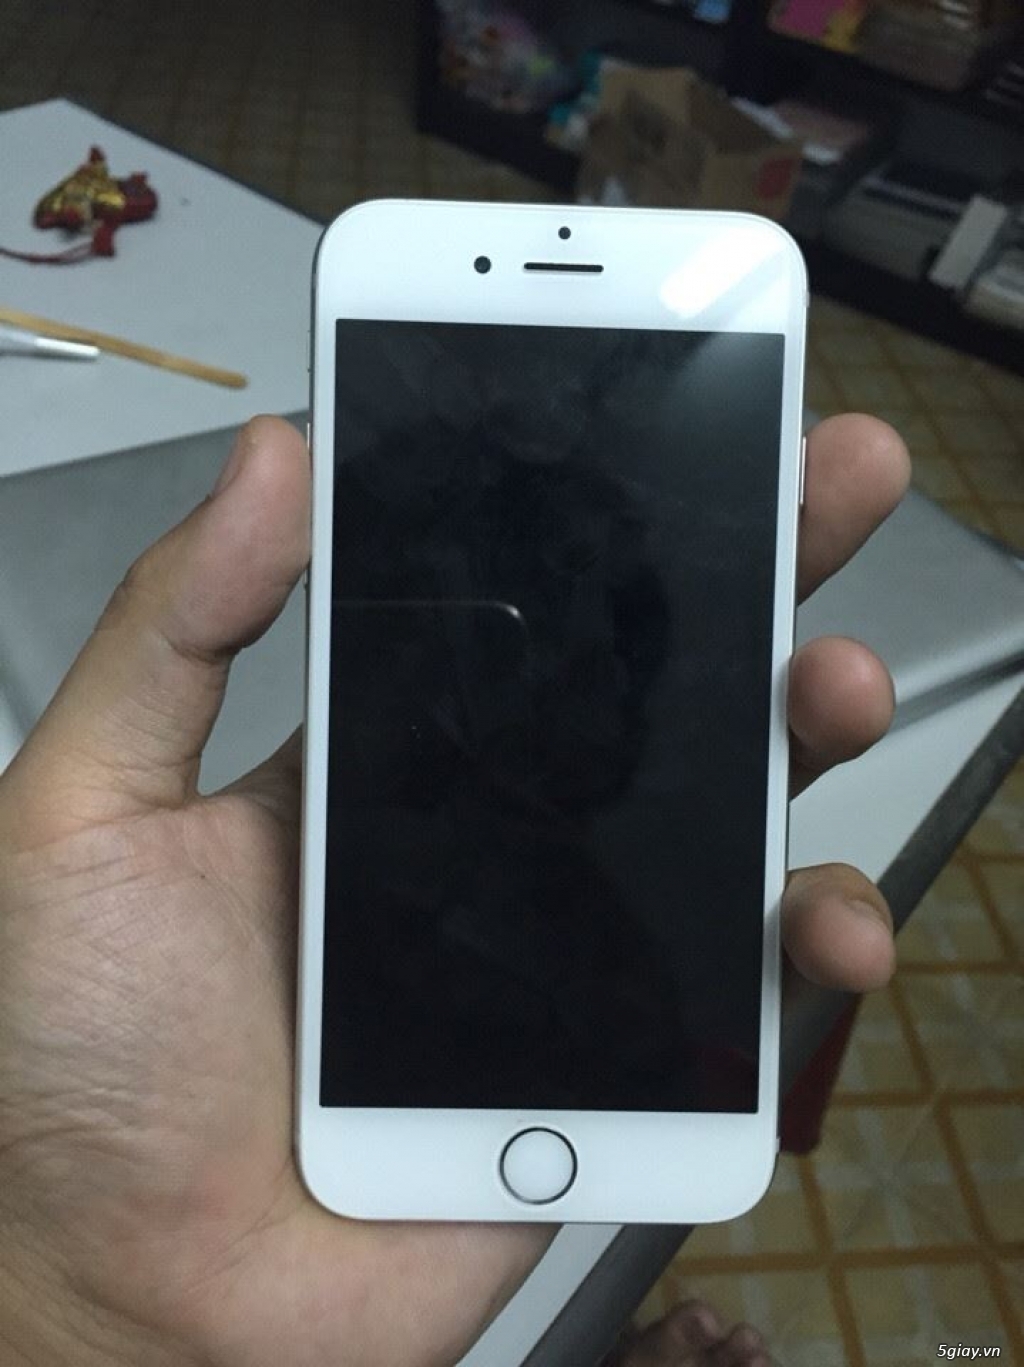 Bán nhanh iPhone 6 16G white icloud lost nguyên zin 4tr - 2